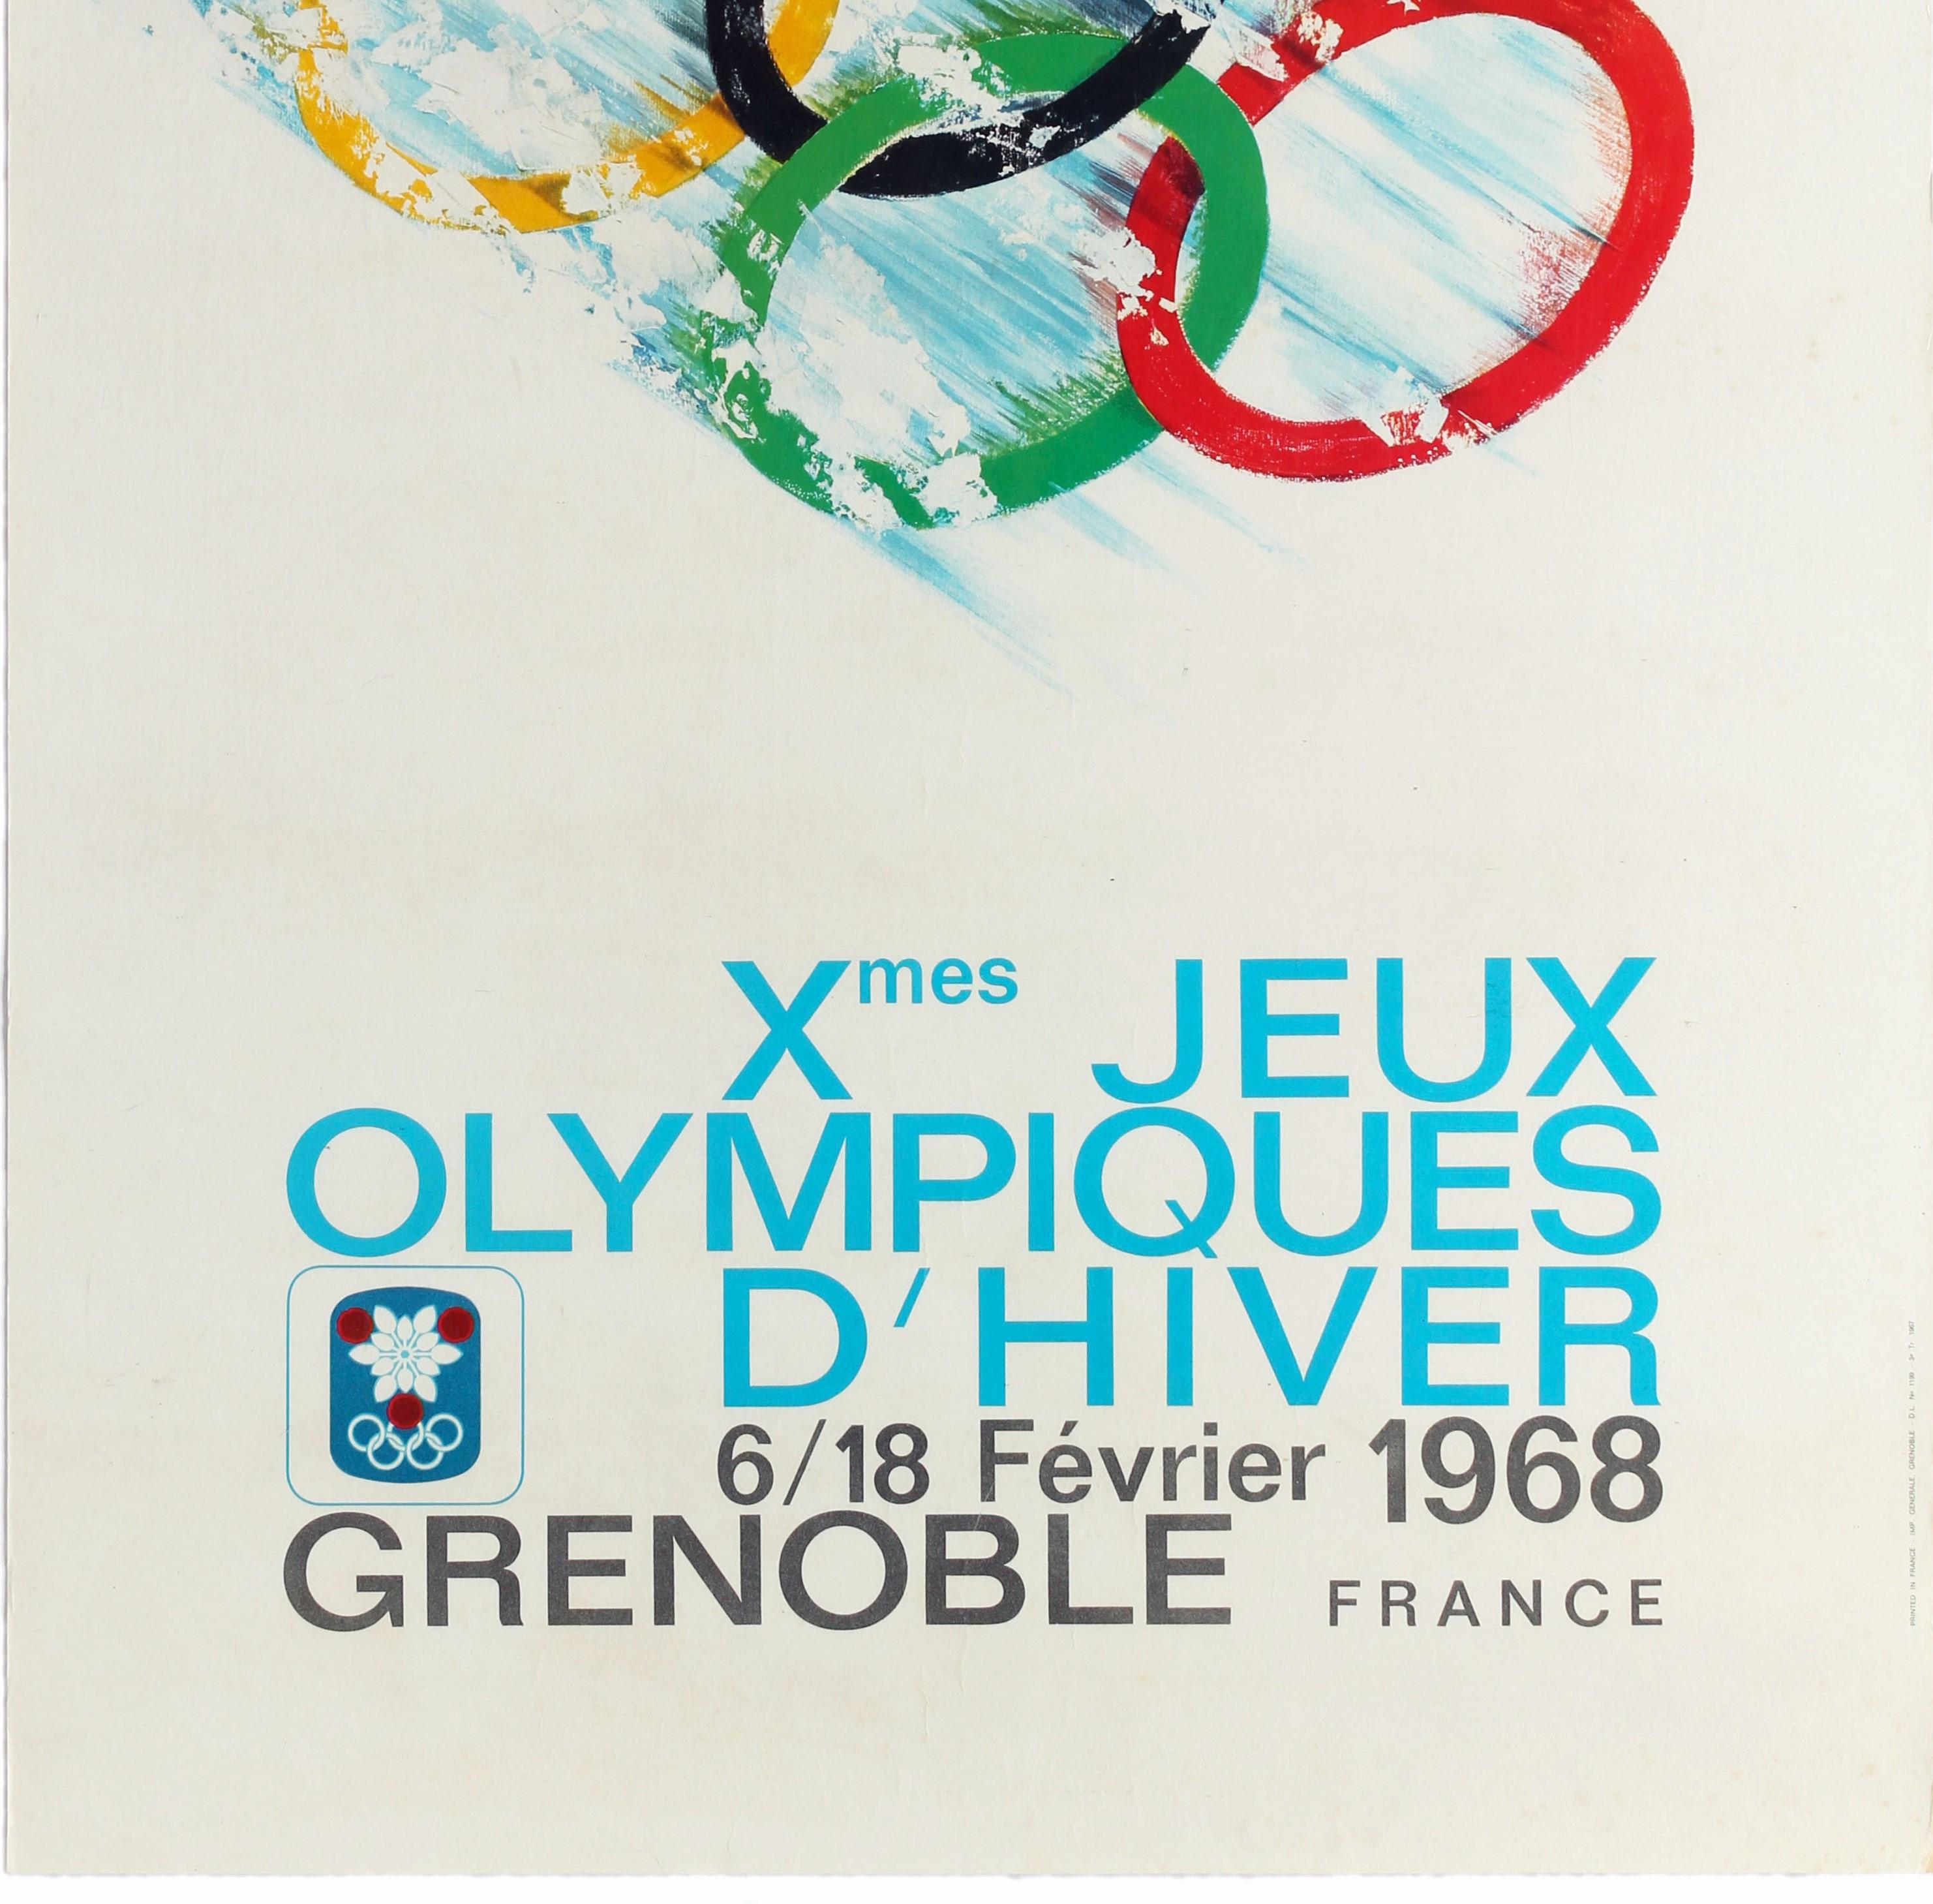 1968 grenoble olympics poster